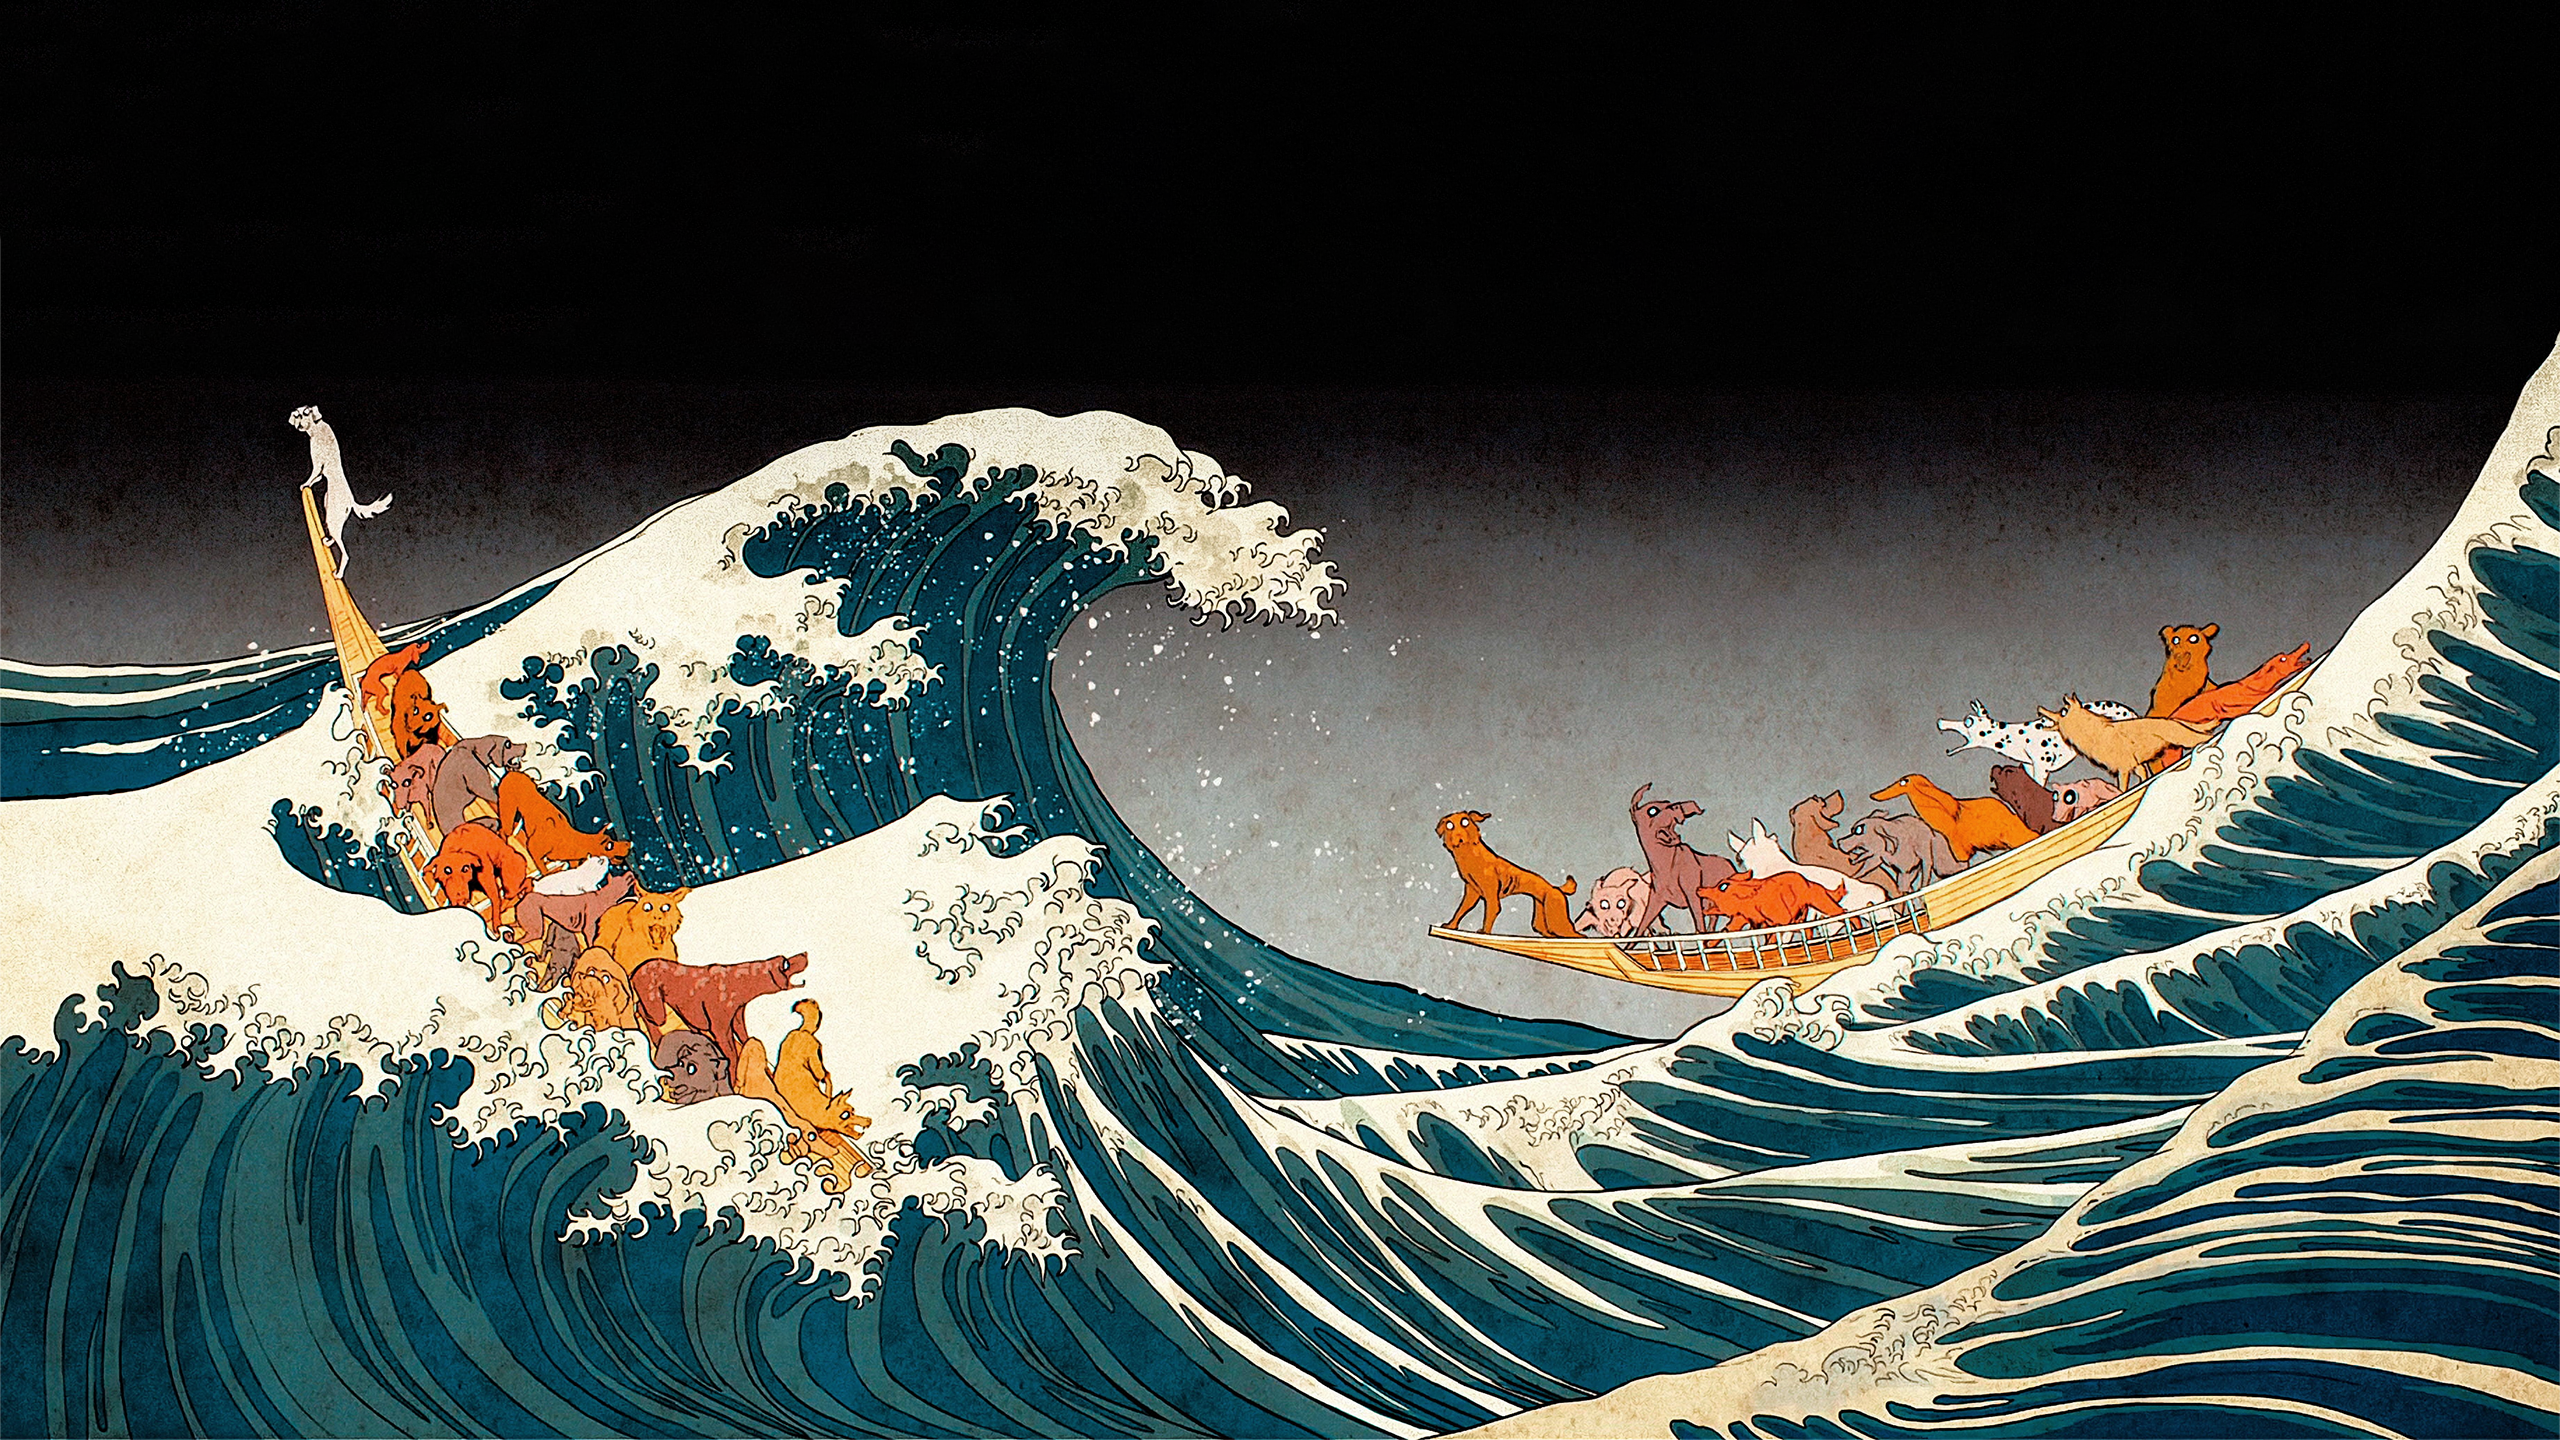 General 2560x1440 Isle of Dogs dog waves digital art Ukiyo-e movies The Great Wave of Kanagawa